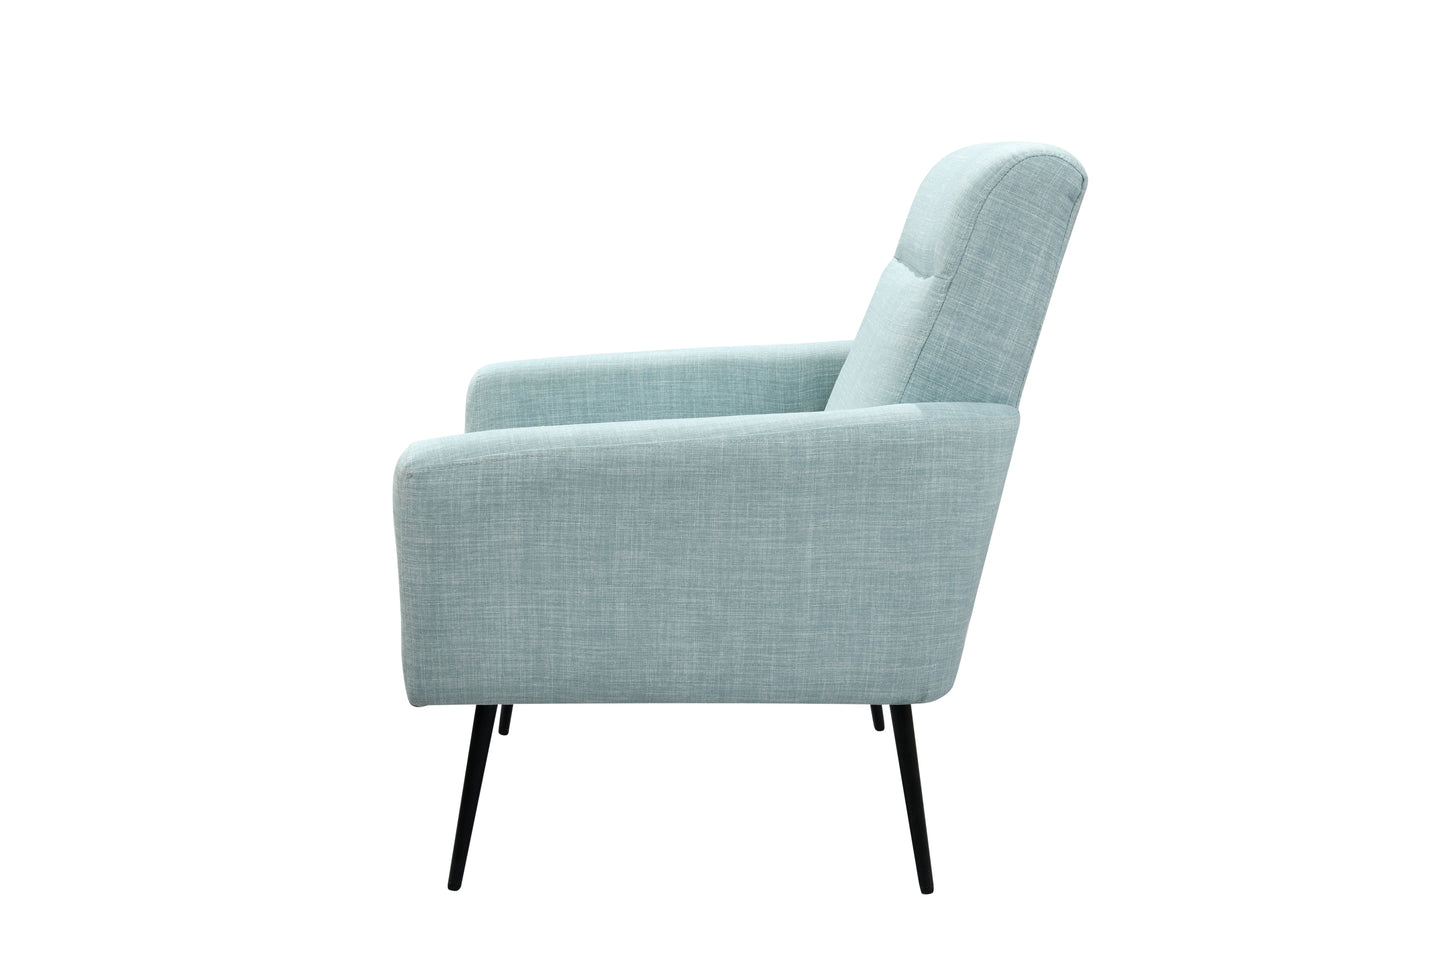 Retro Cool Blue Mid Century Modern Chair